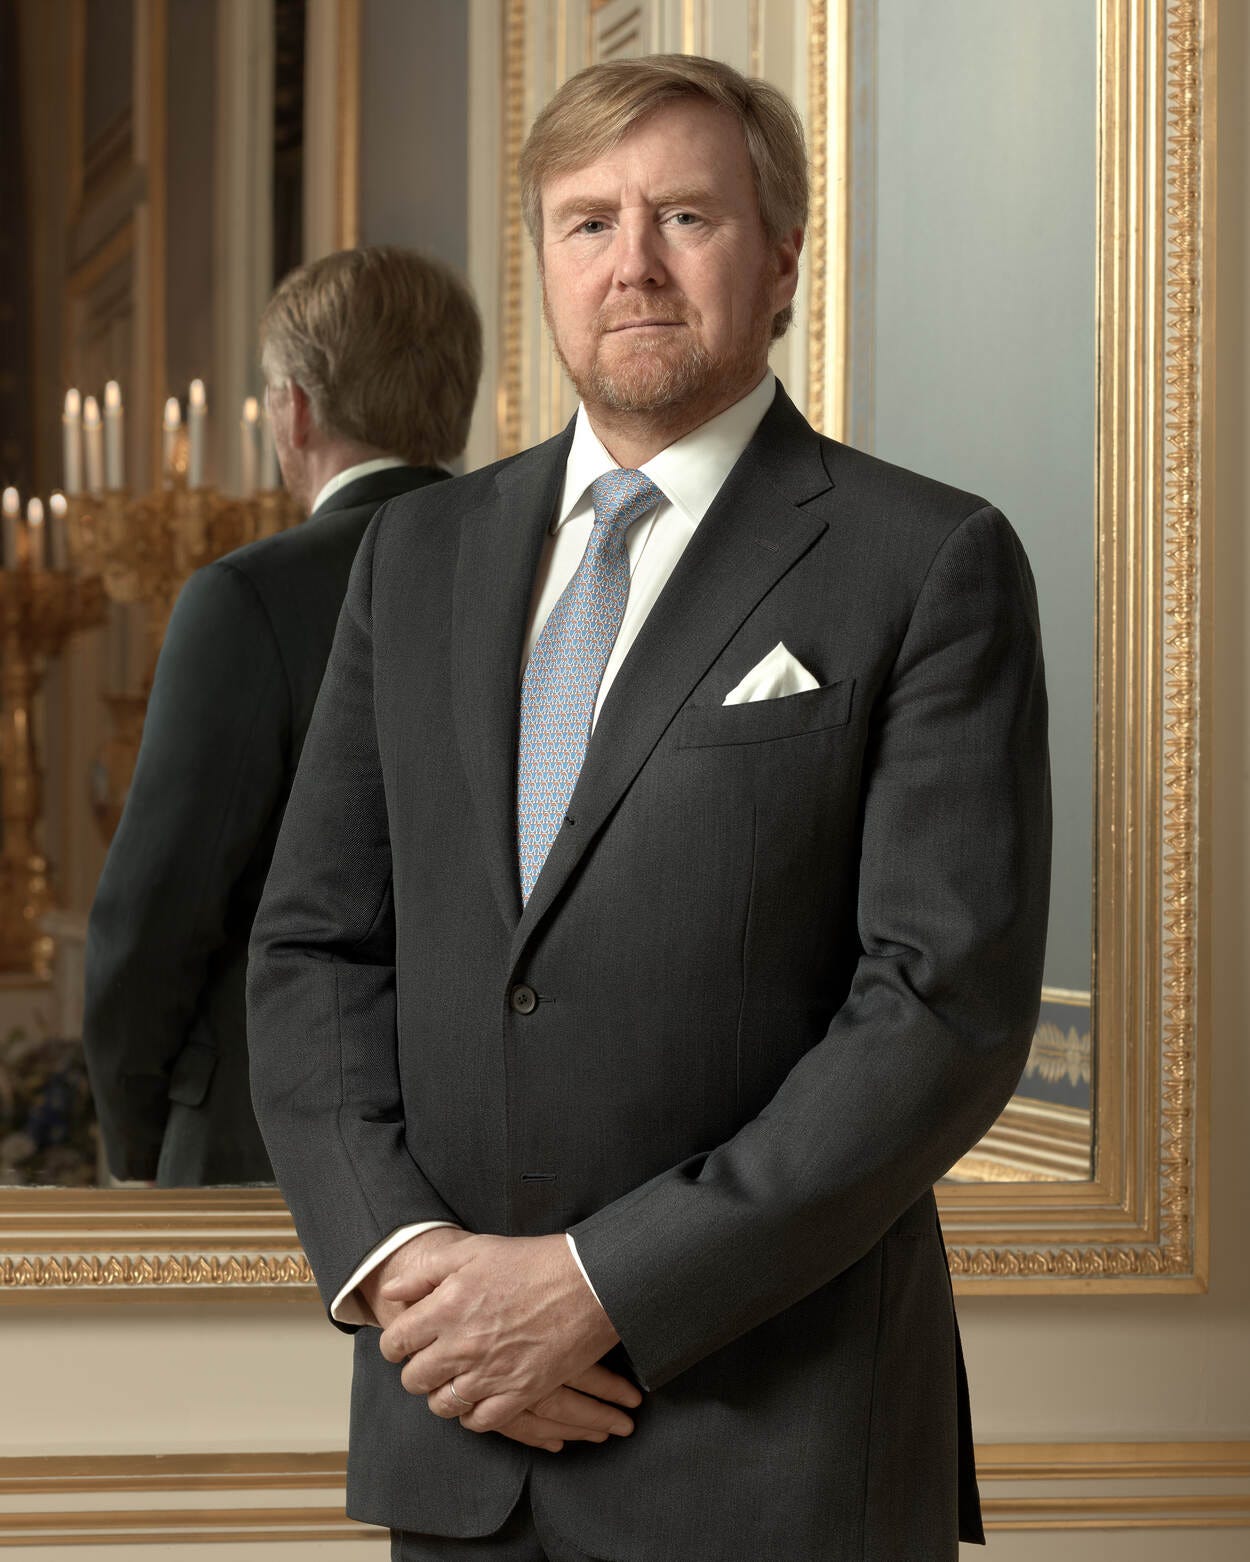 King Willem-Alexander | Royal House of the Netherlands